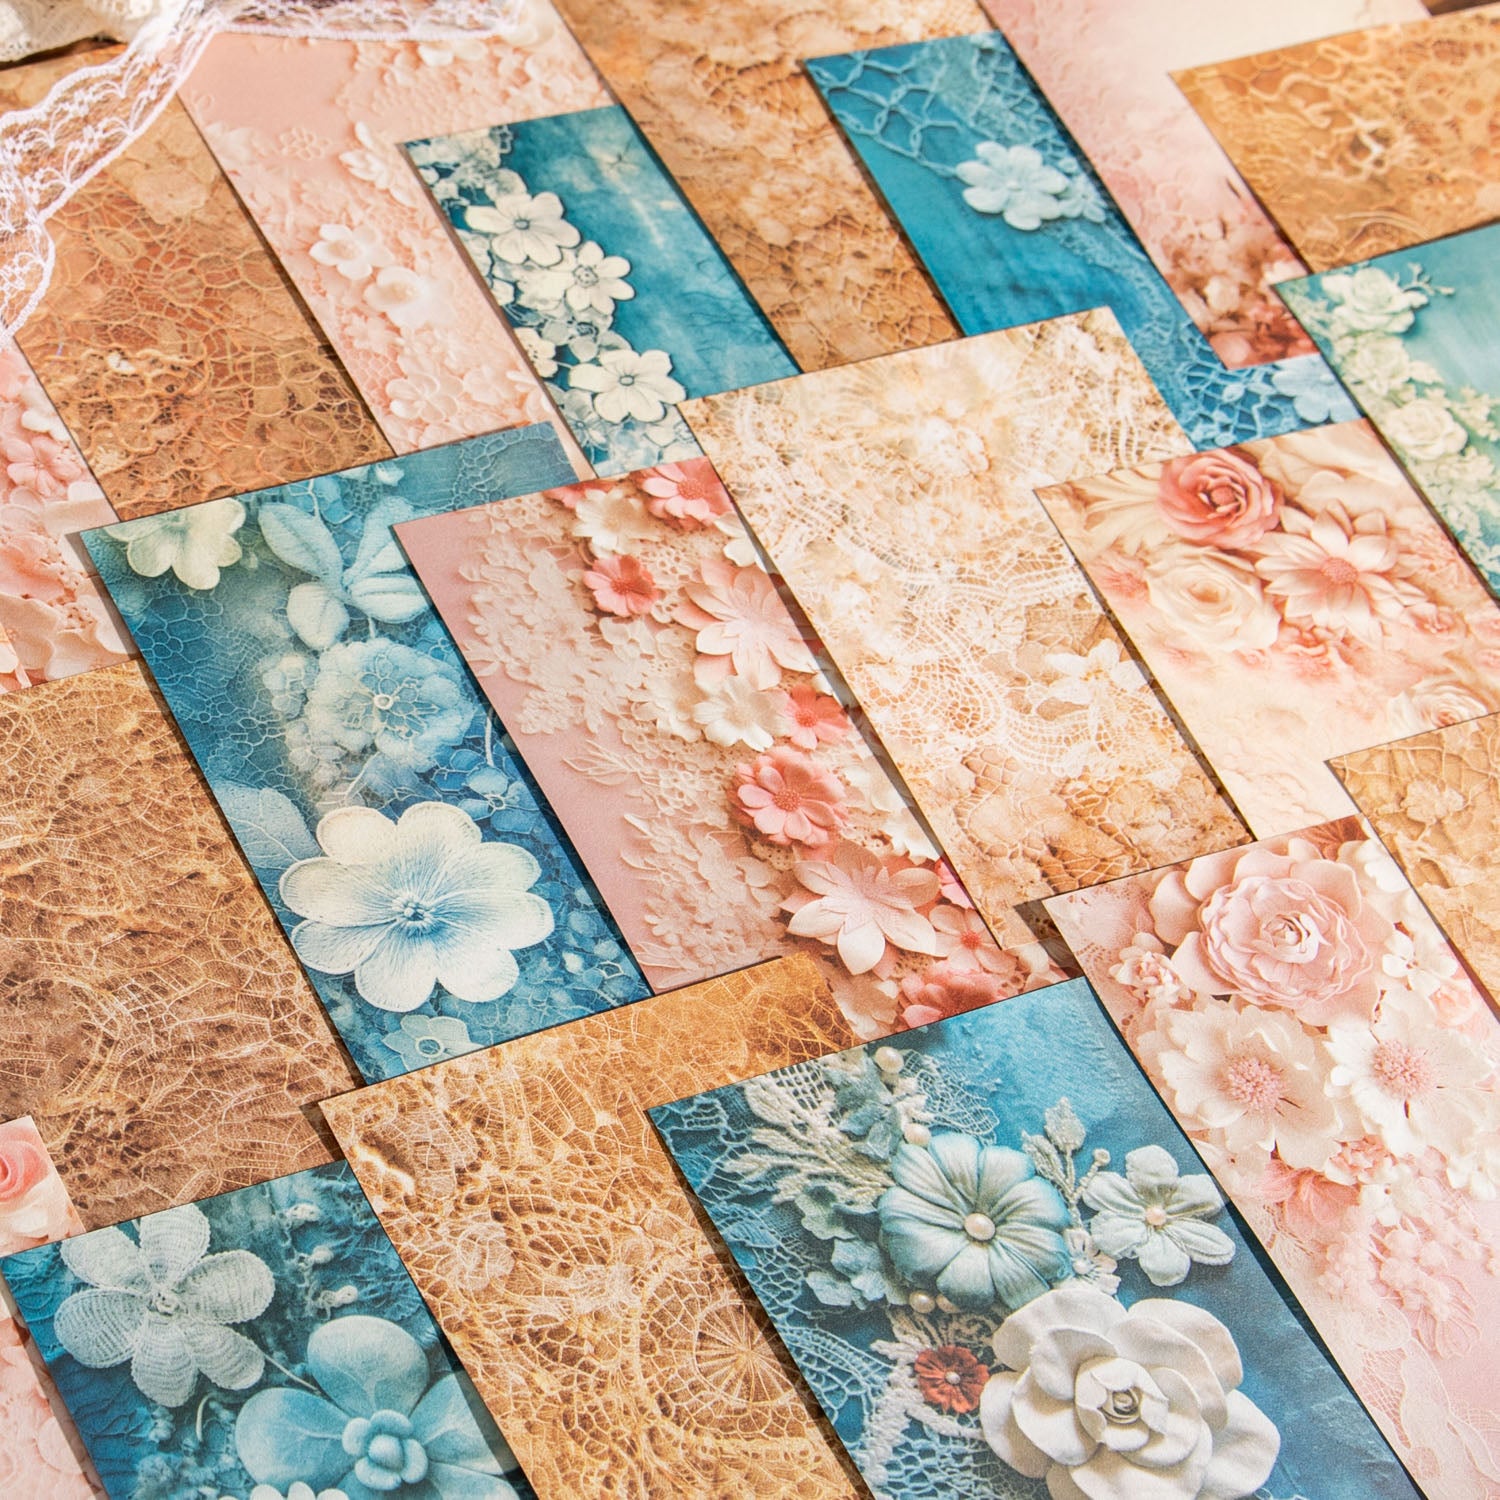 Lace Workshop Scrapbooking Paper For paper crafts